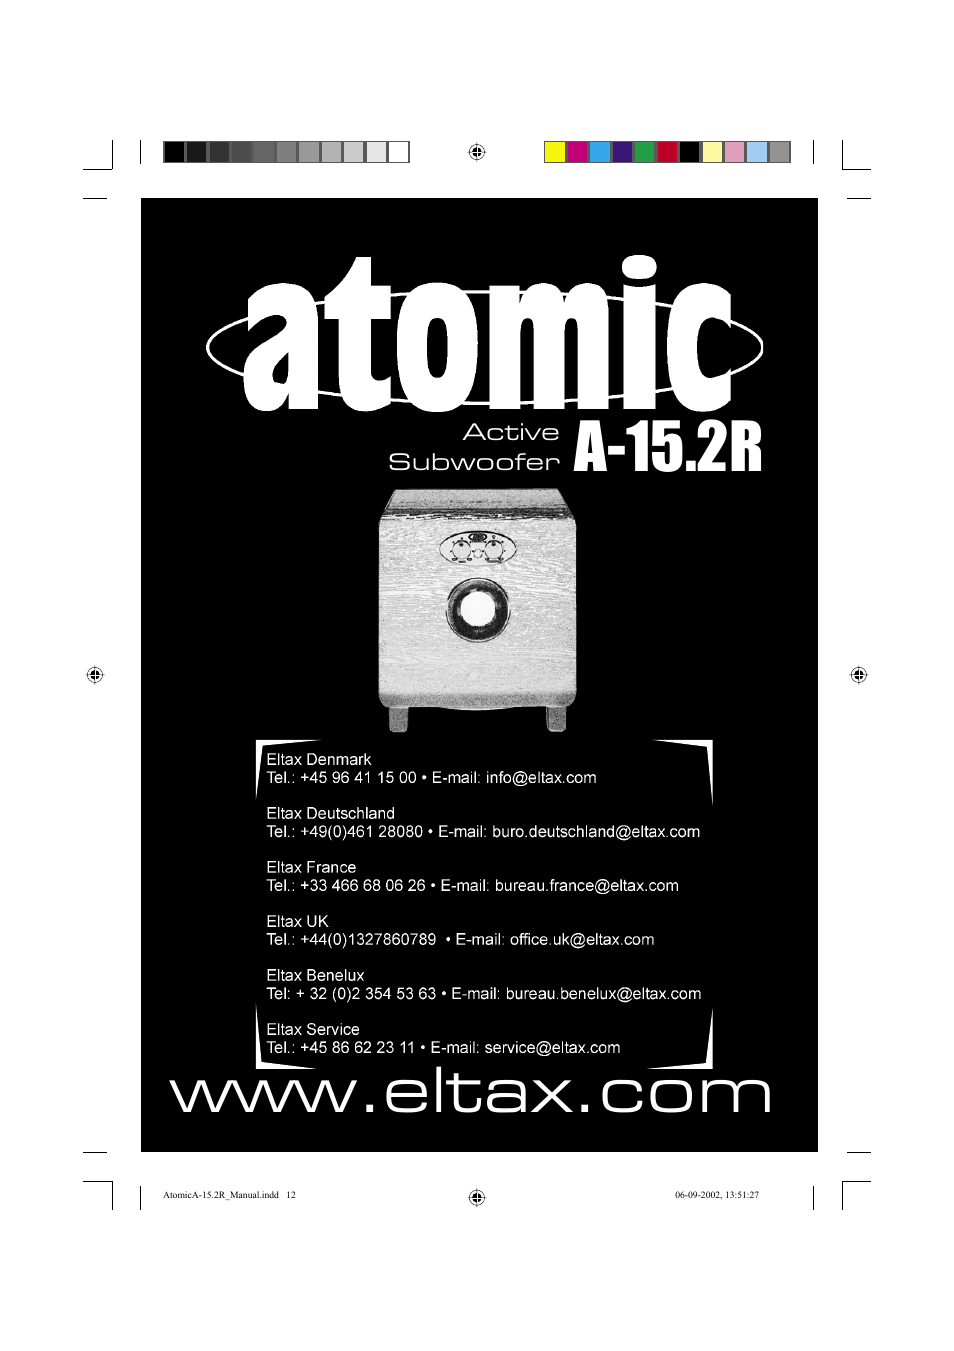 A-15.2r, Active subwoofer | Eltax Atomic A-15.2R User Manual | Page 12 / 12  | Original mode